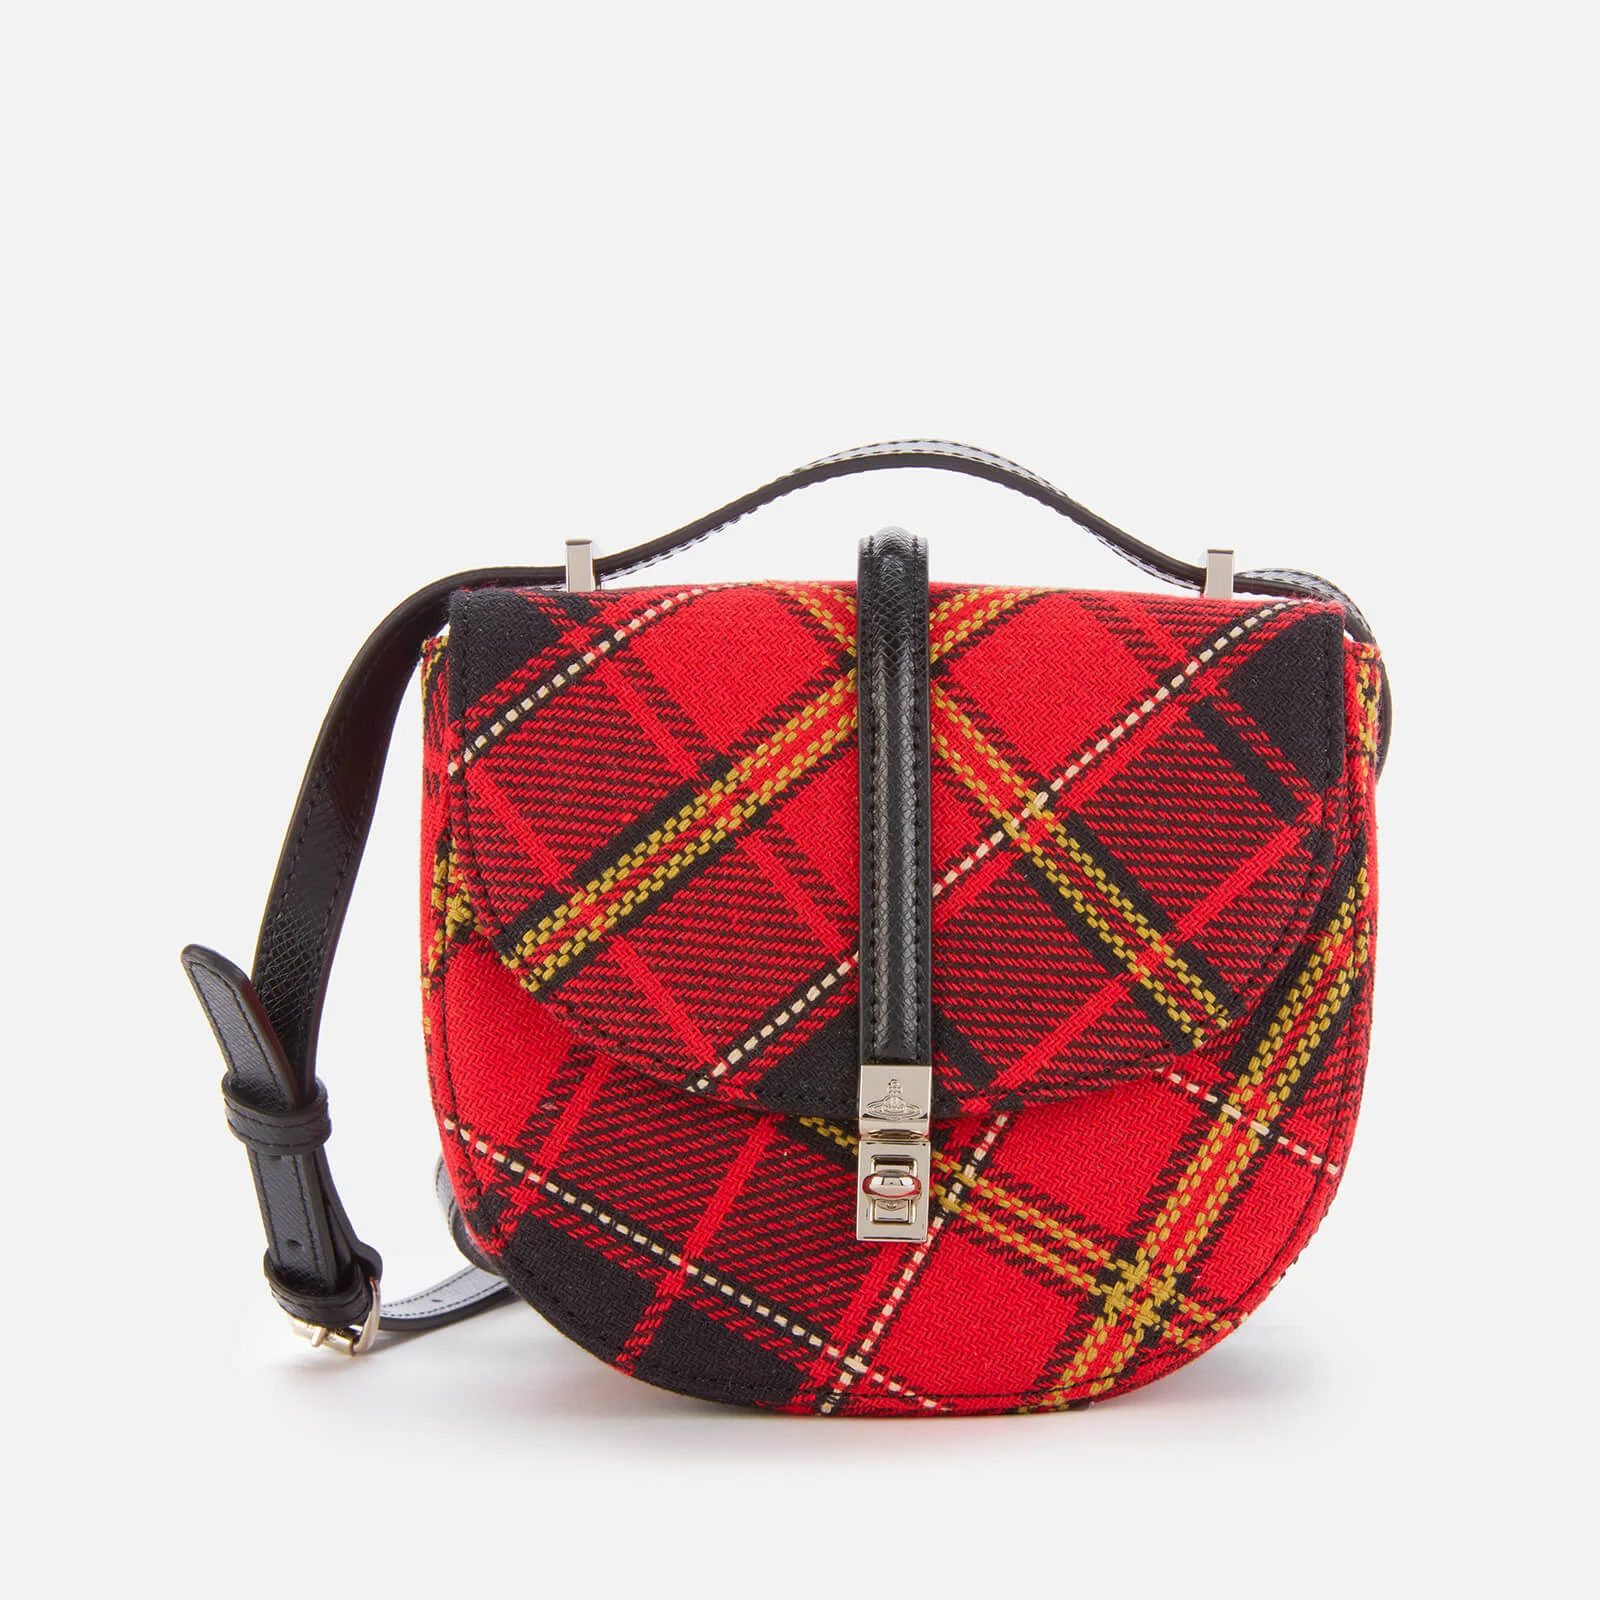 Vivienne Westwood Women's Special Sofia Mini Saddle Bag - Red/Black Image 1